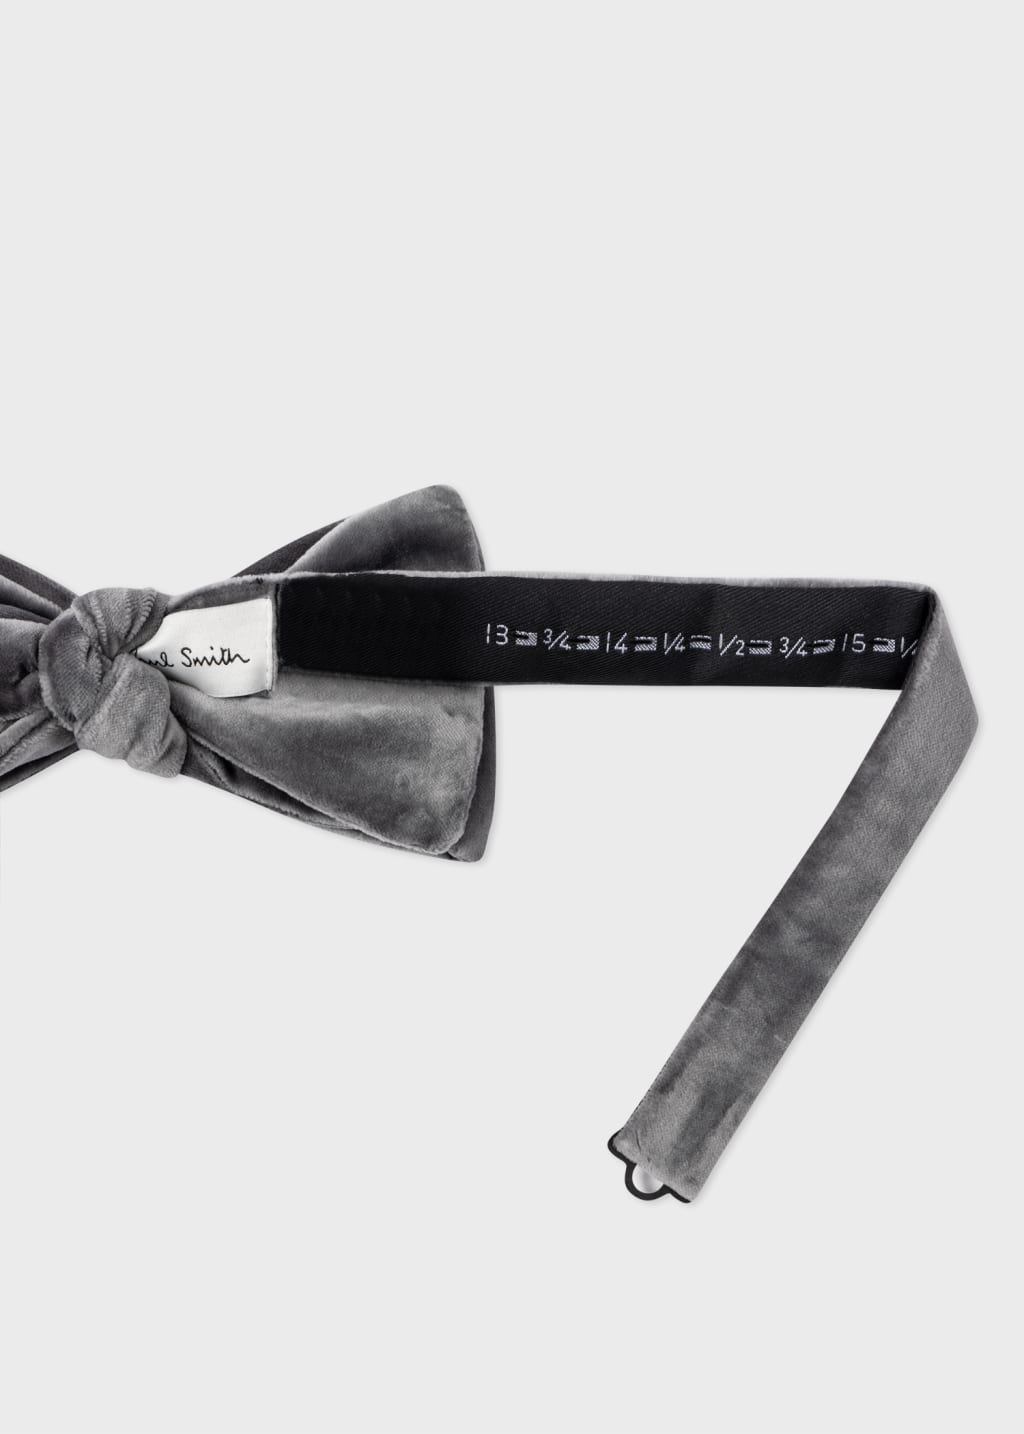 Detail View - Grey Velvet Self-Tie Bow Tie Paul Smith